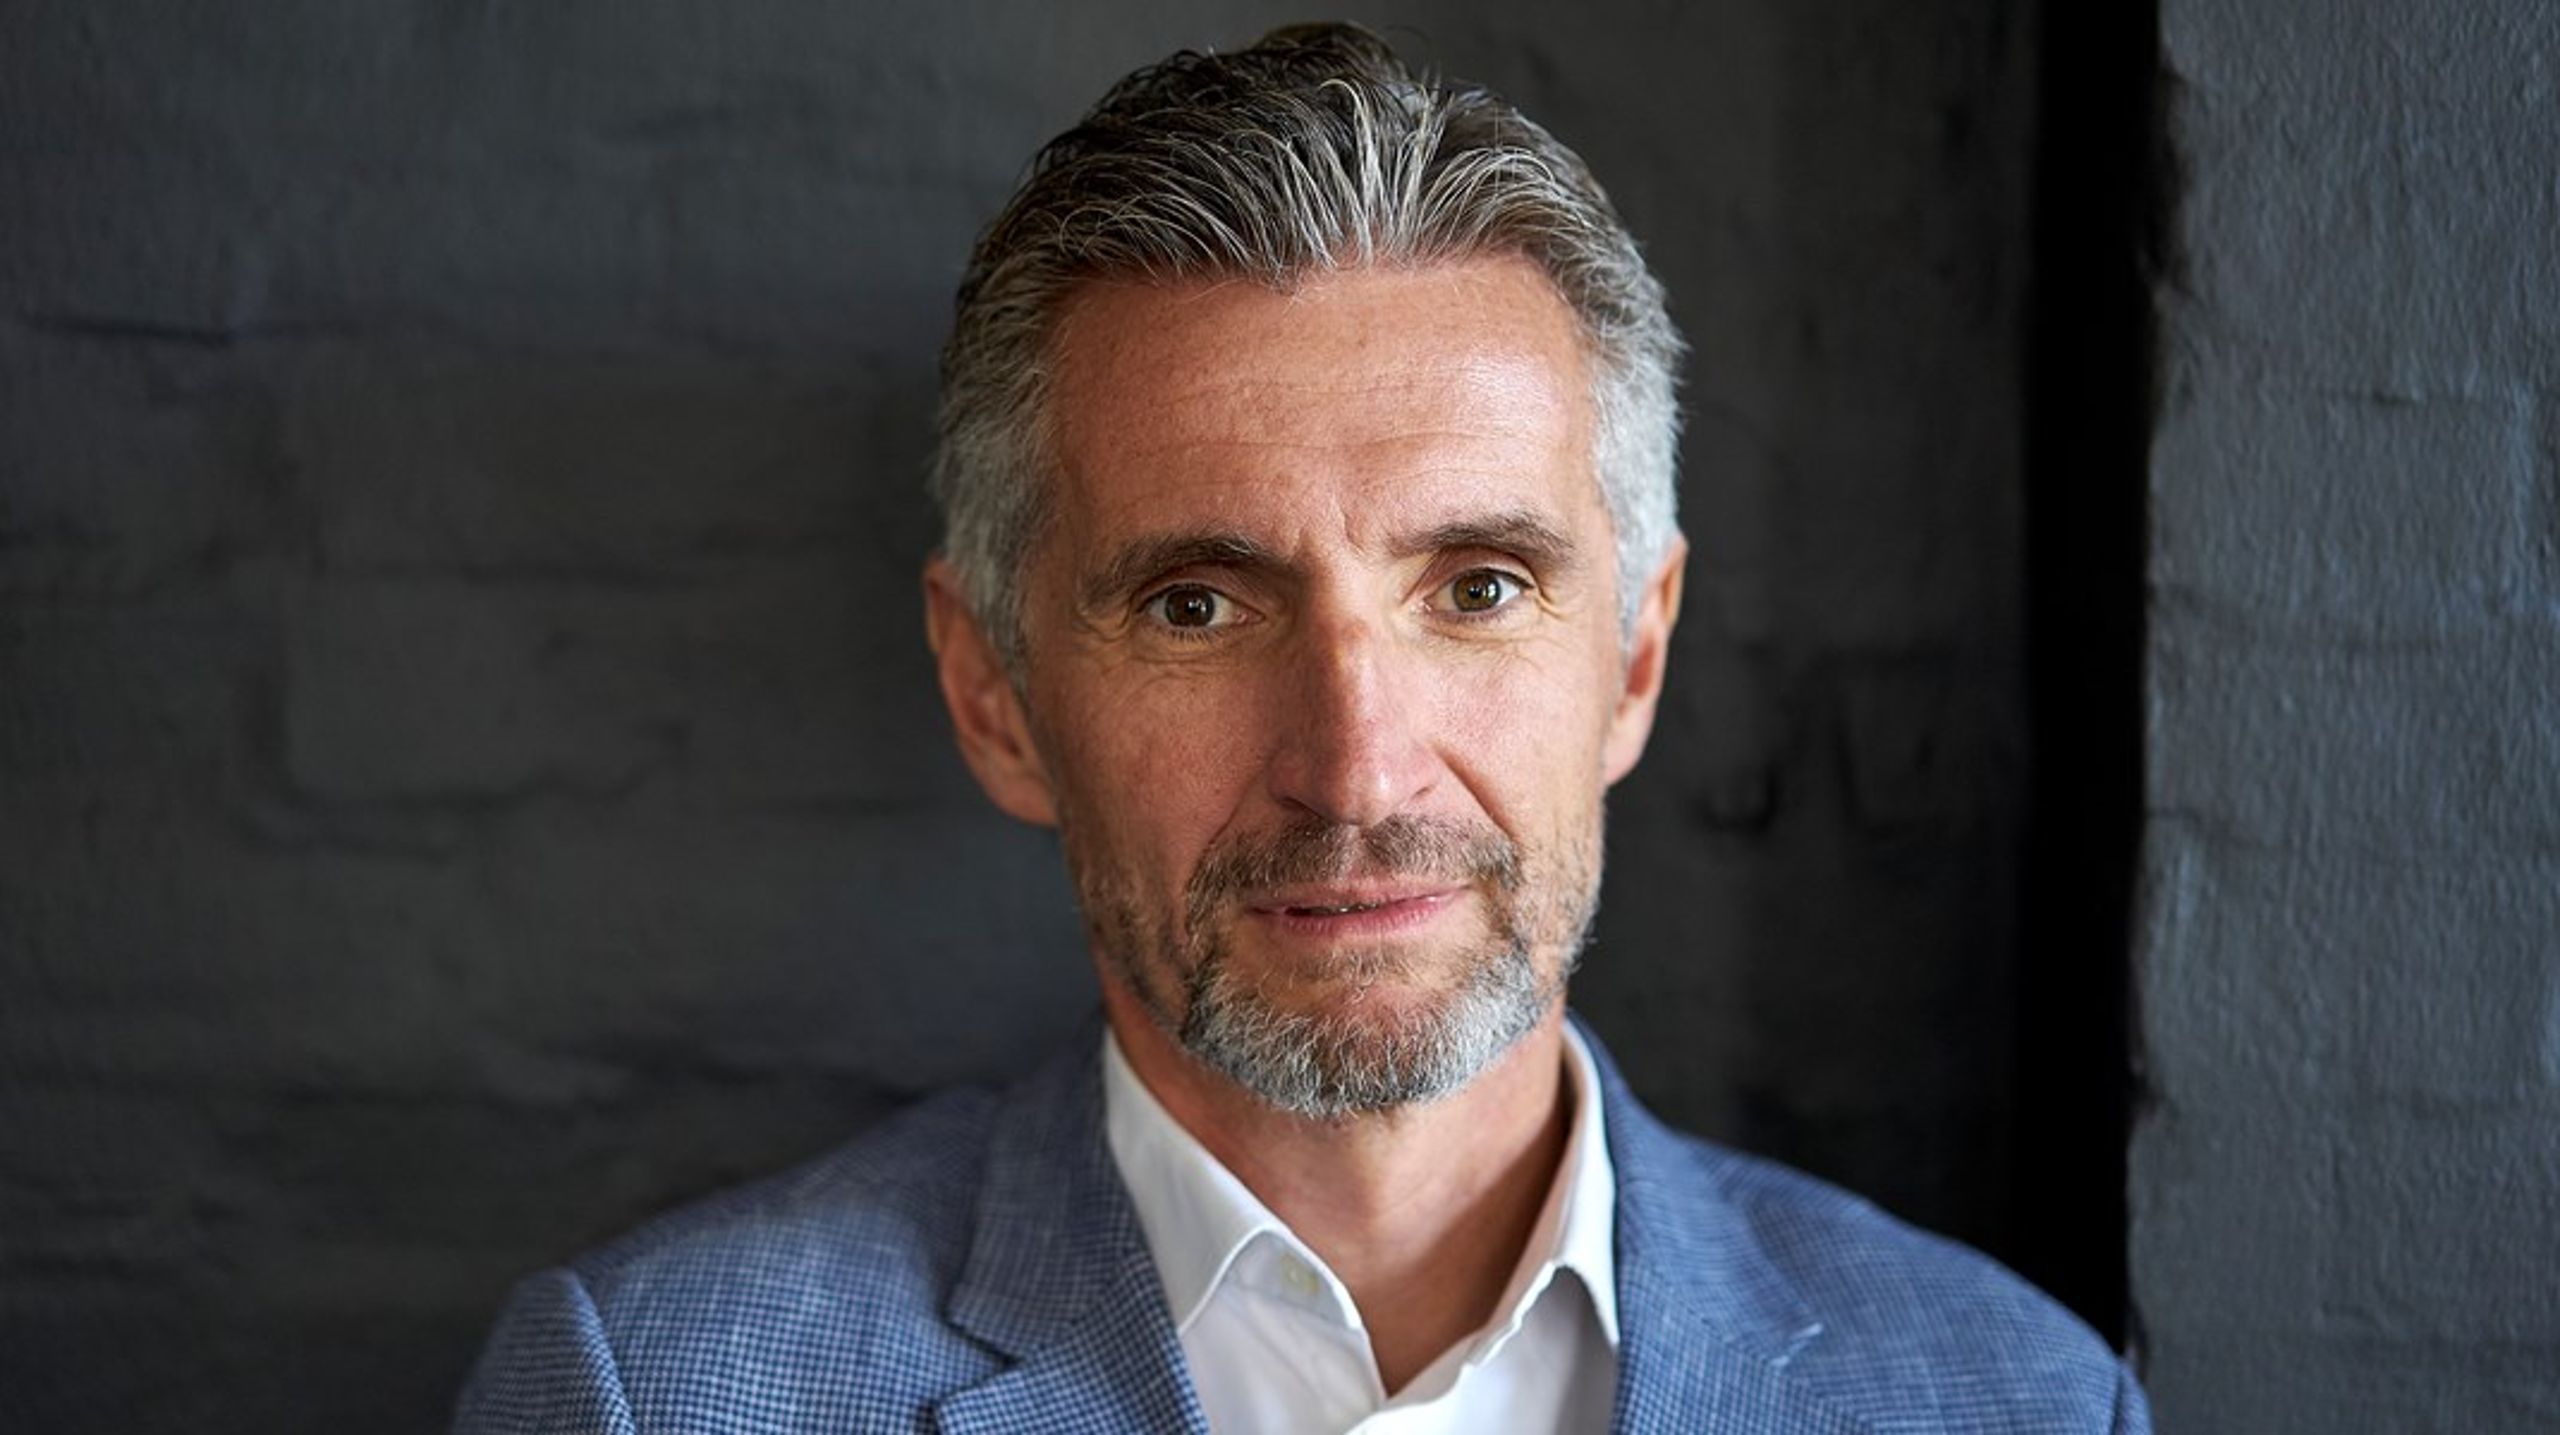 Jesper Uggerhøj har tidligere været direktør i Irma og Kopenhagen Fur, og har siden 2019 været administrerende direktør i Løgismose.